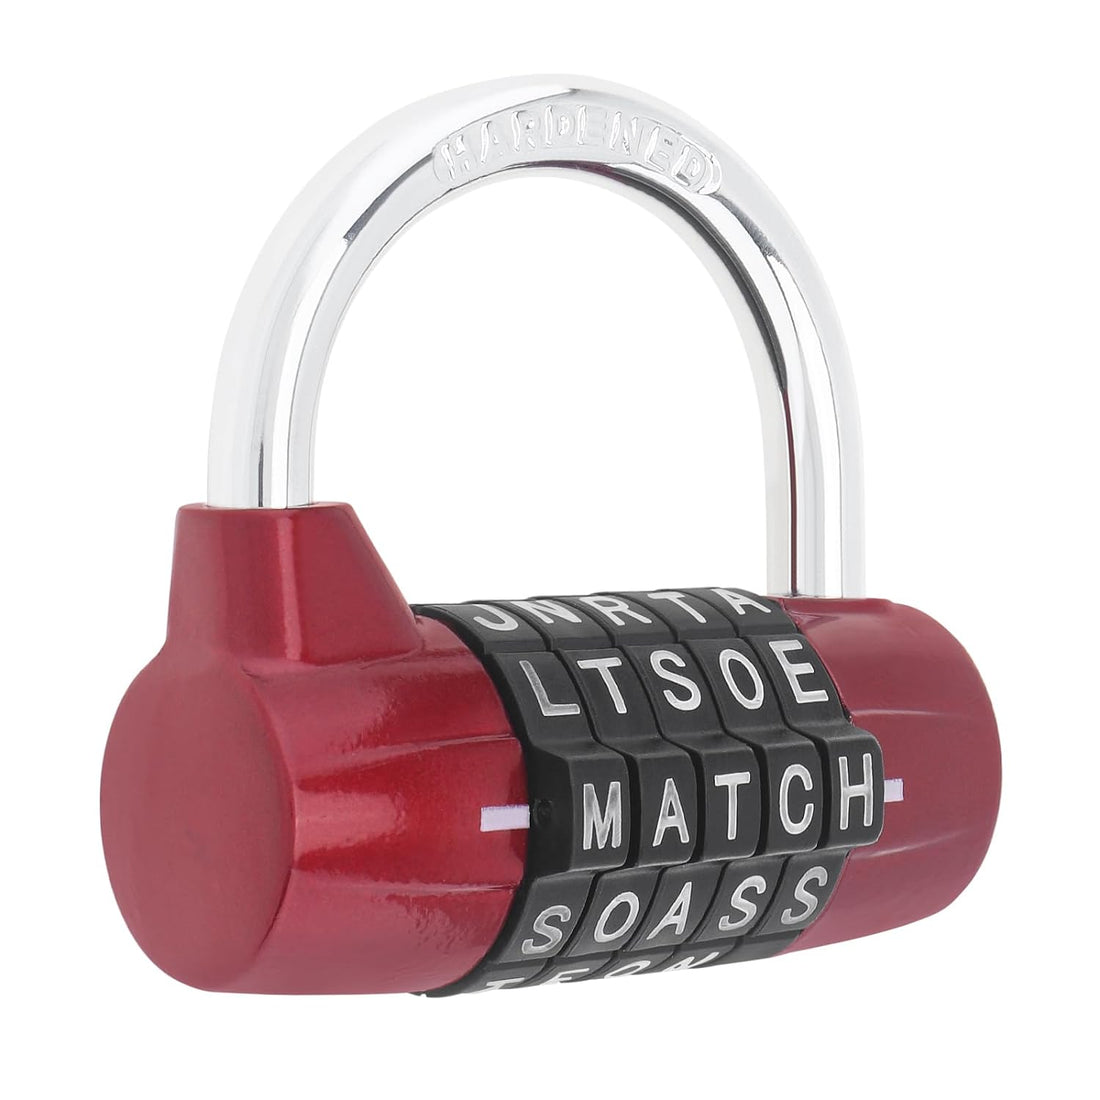 HOJLKLD Gym Locker Lock 5 Letter Word Lock Safety Padlock Combination Lock for School Gym Locker,Sports Locker,Fence,Toolbox,Case,Hasp Storage (Red)